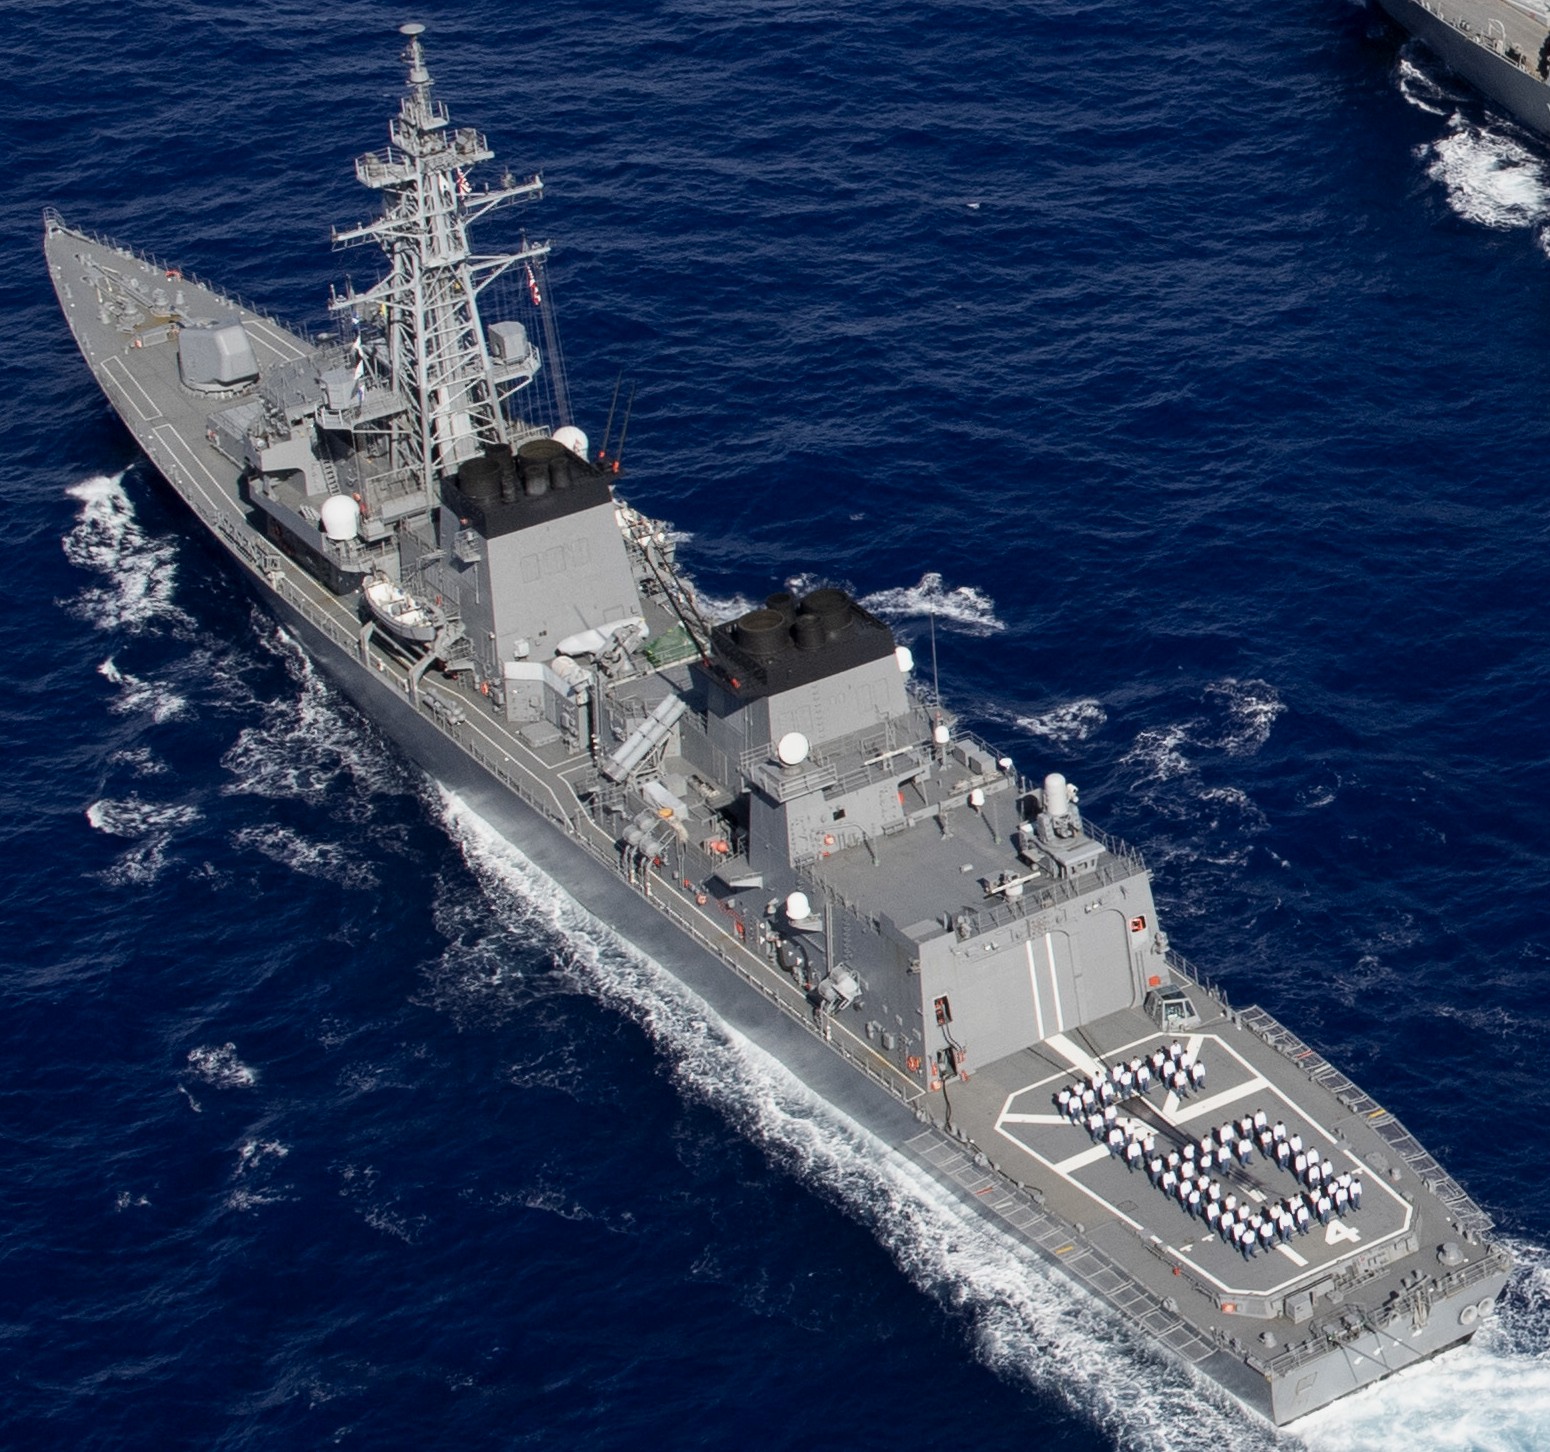 dd-114 js suzunami takanami class destroyer japan maritime self defense force jmsdf 17